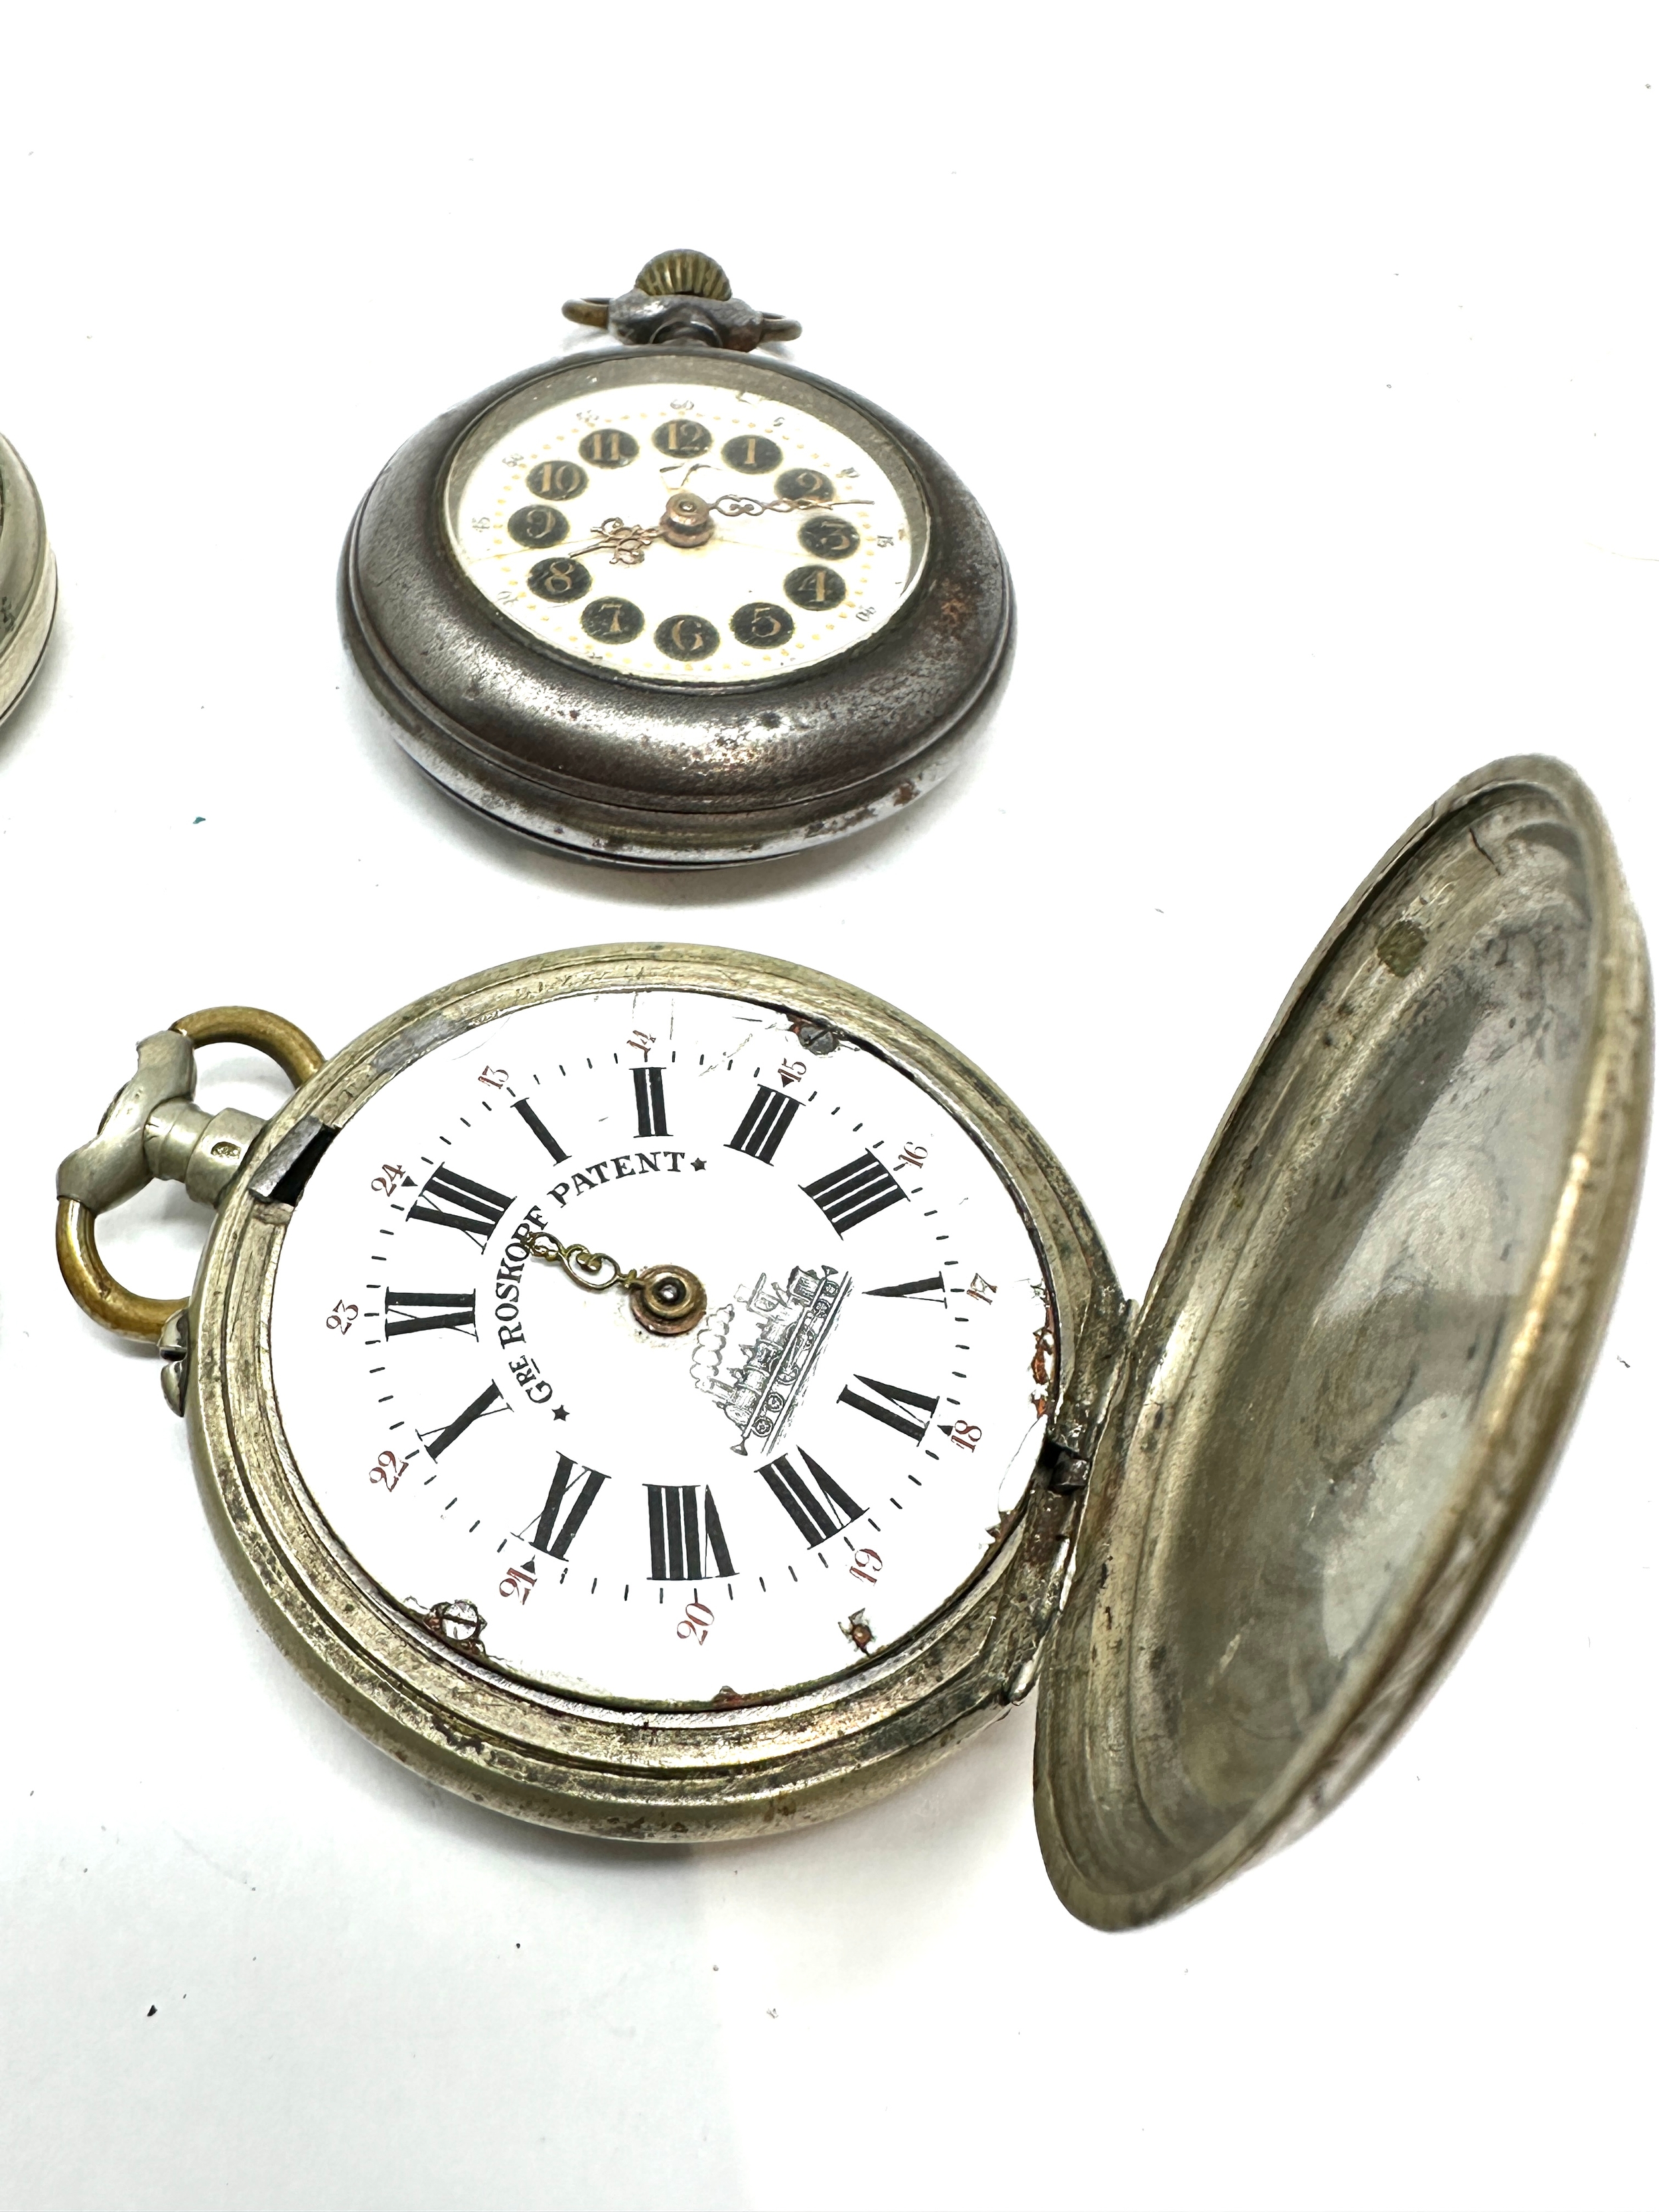 4 Vintage pocket watches cyma brialle & roskopfe etc spares or repair - Image 3 of 6